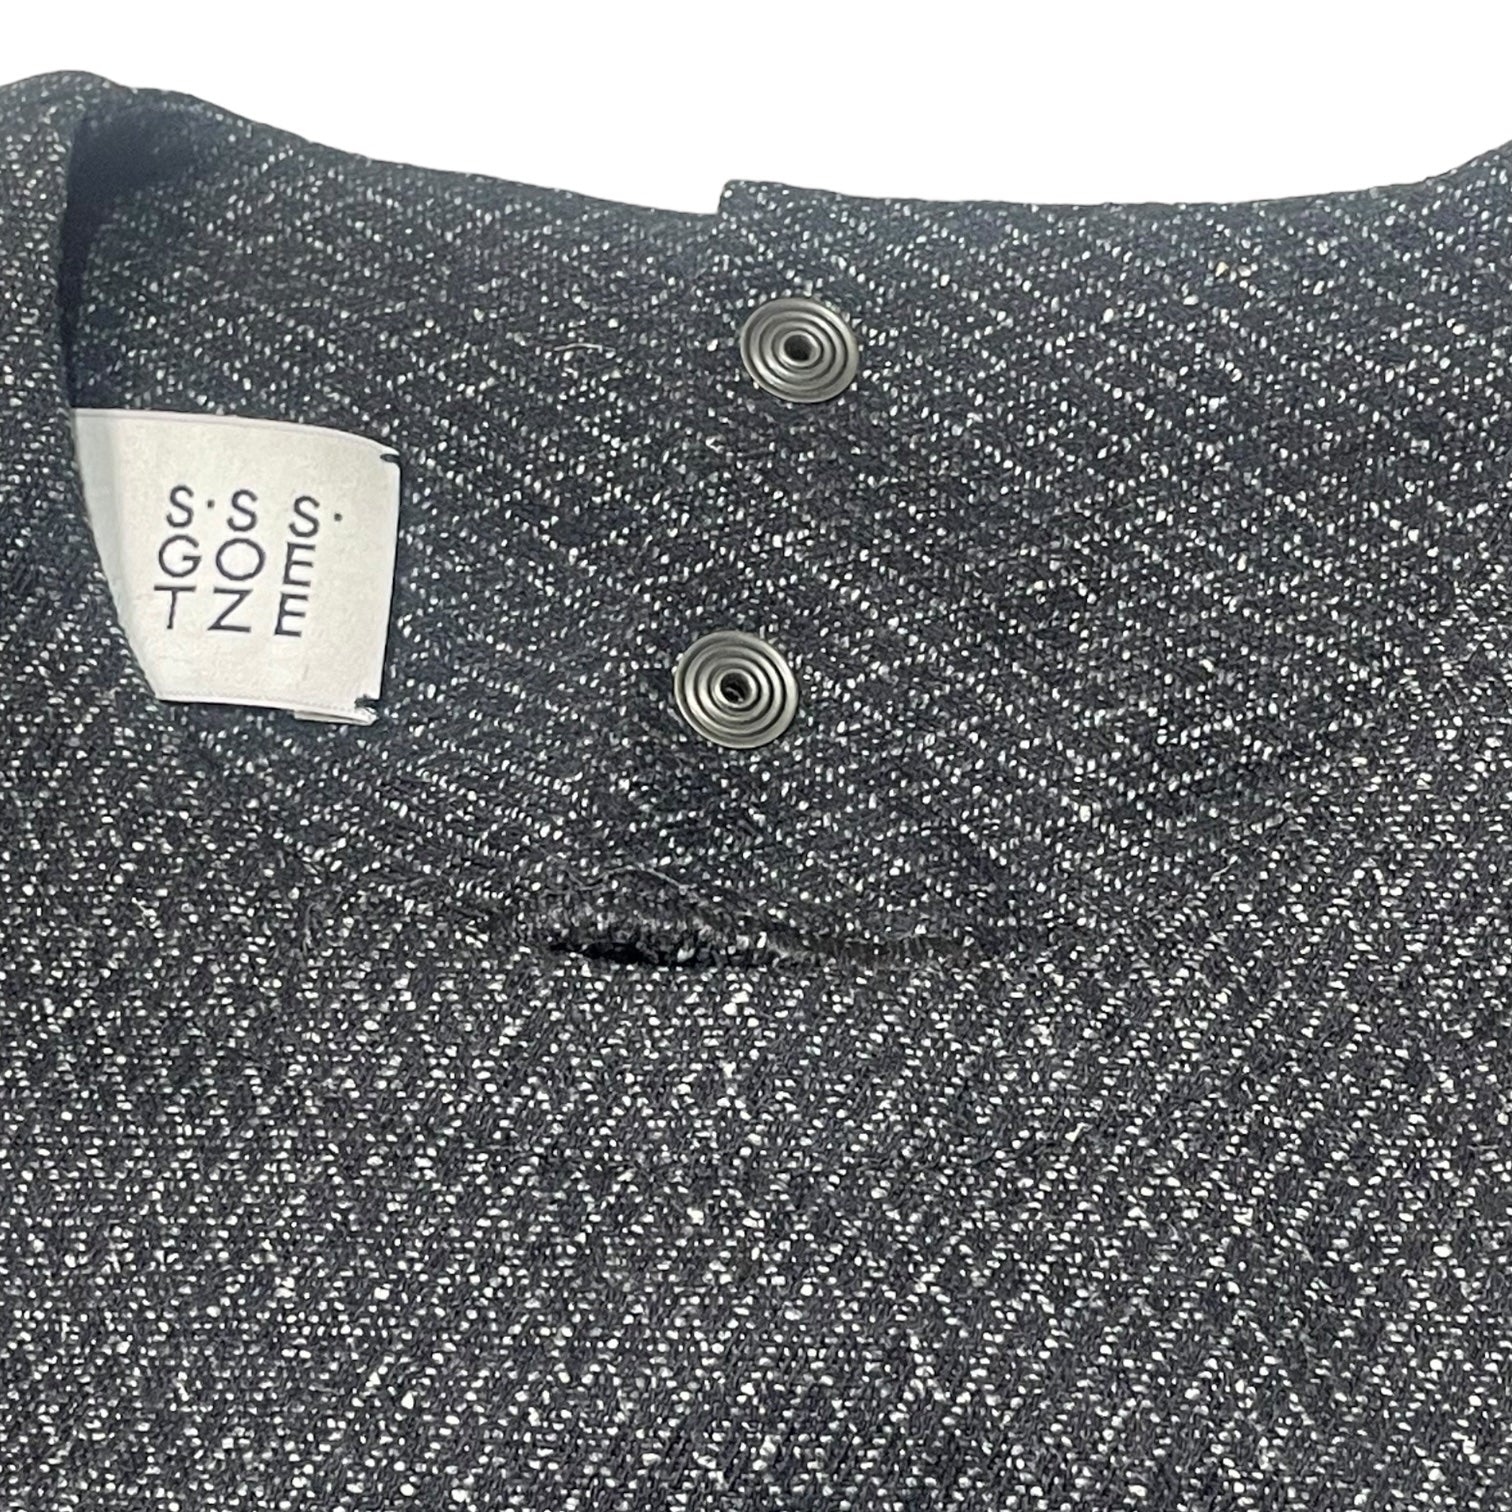 SISSI GOETZE(シッシゴェッツェ) Front pocket sheep wool pullover cut and sew フロントポケット シープウール プルオーバー カットソー SIZE 46(S) グレー